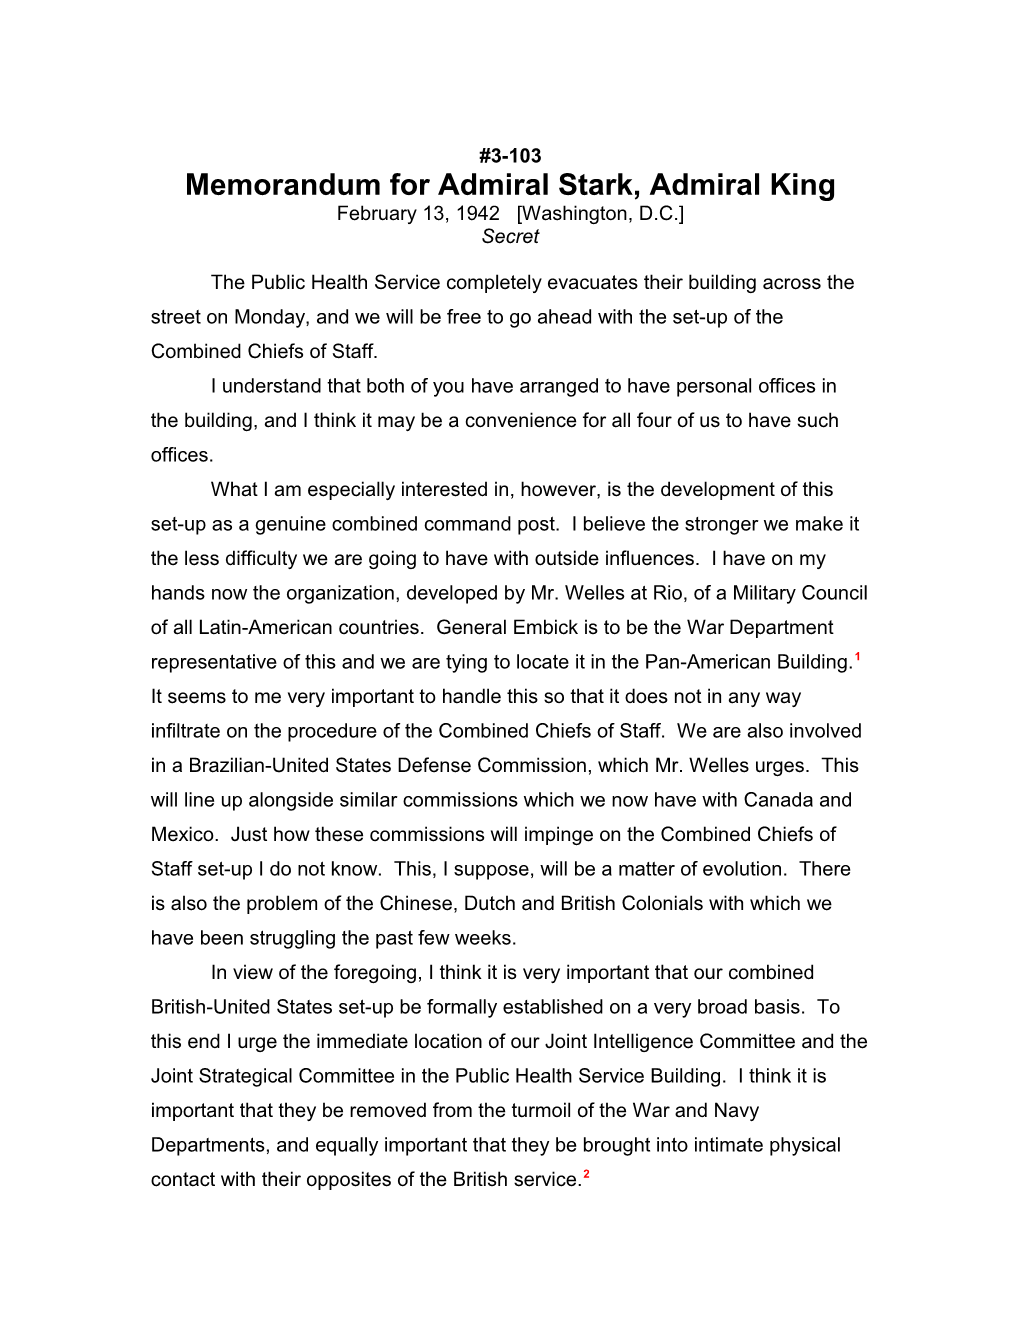 Memorandum for Admiral Stark, Admiral King